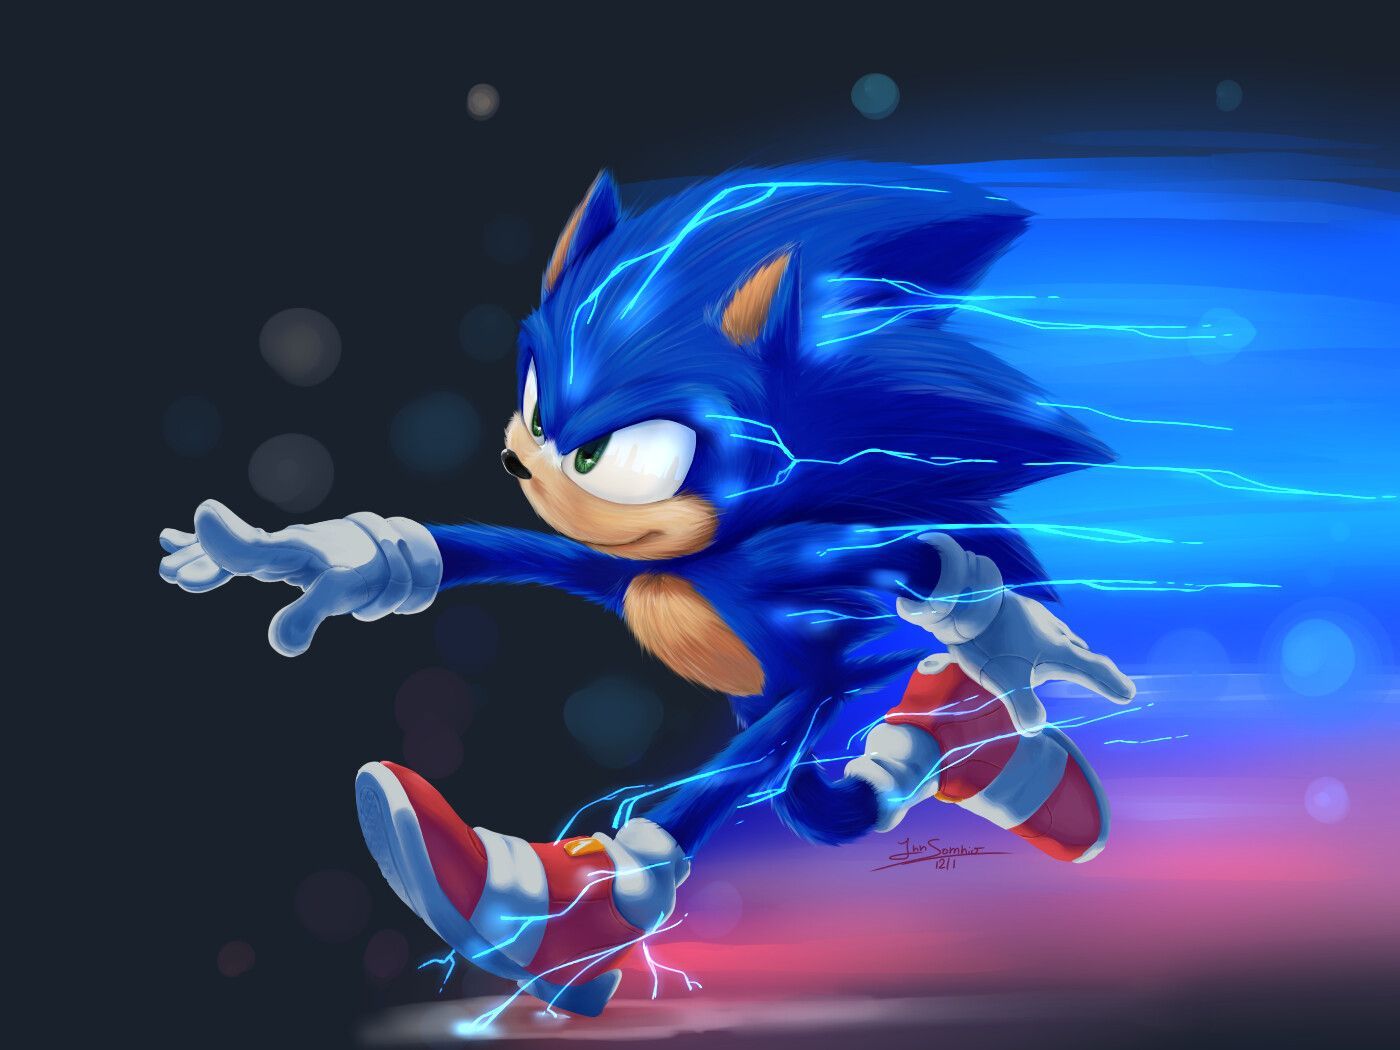 FanArt Sonic Movie, InnSomnio Animator on ArtStation at https://www.artstat...